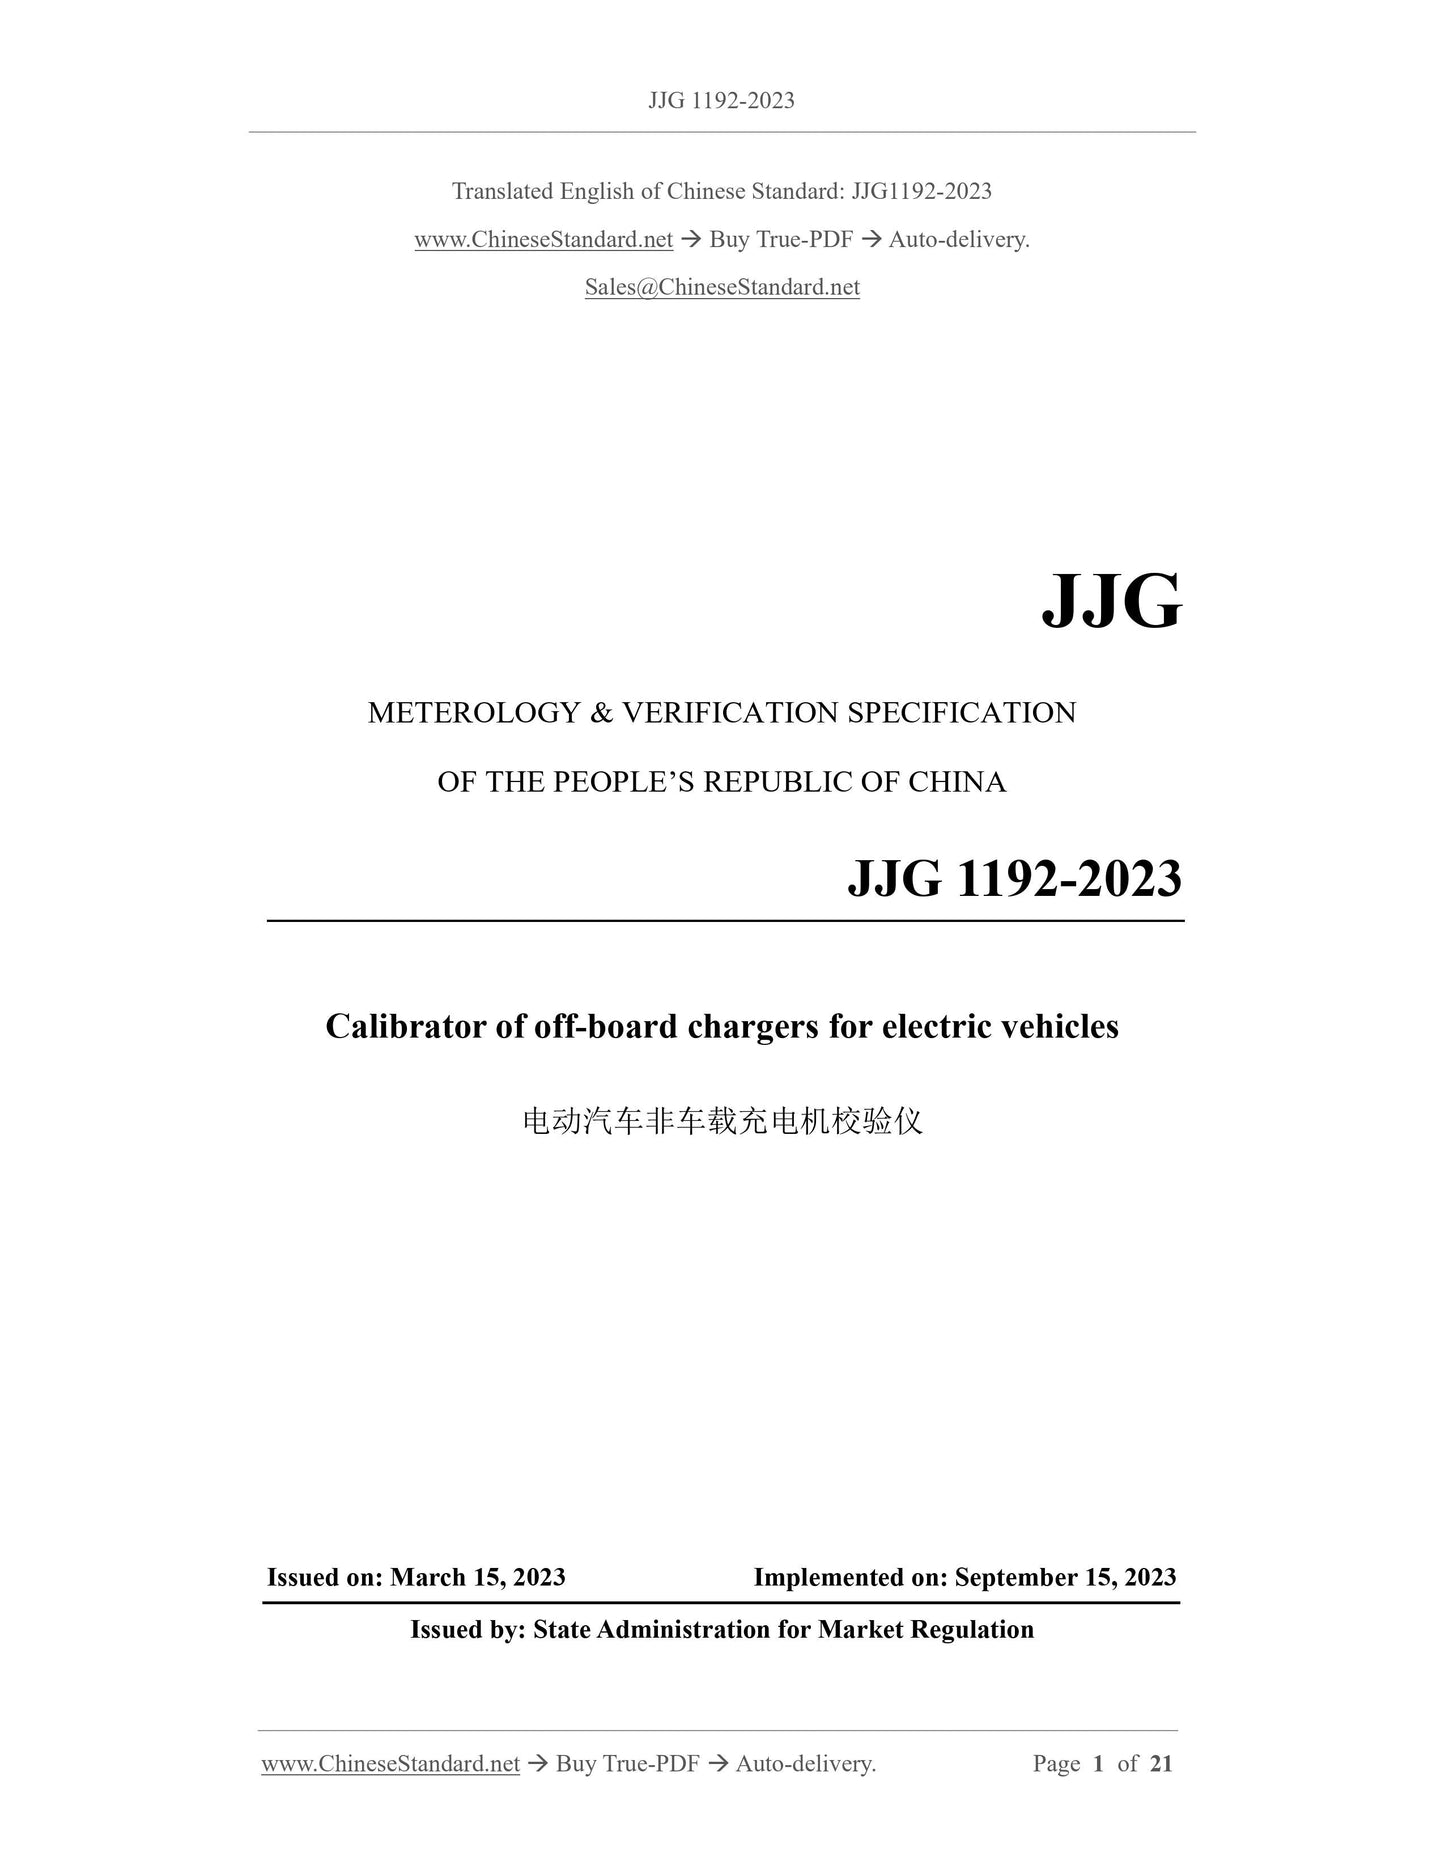 JJG 1192-2023 Page 1